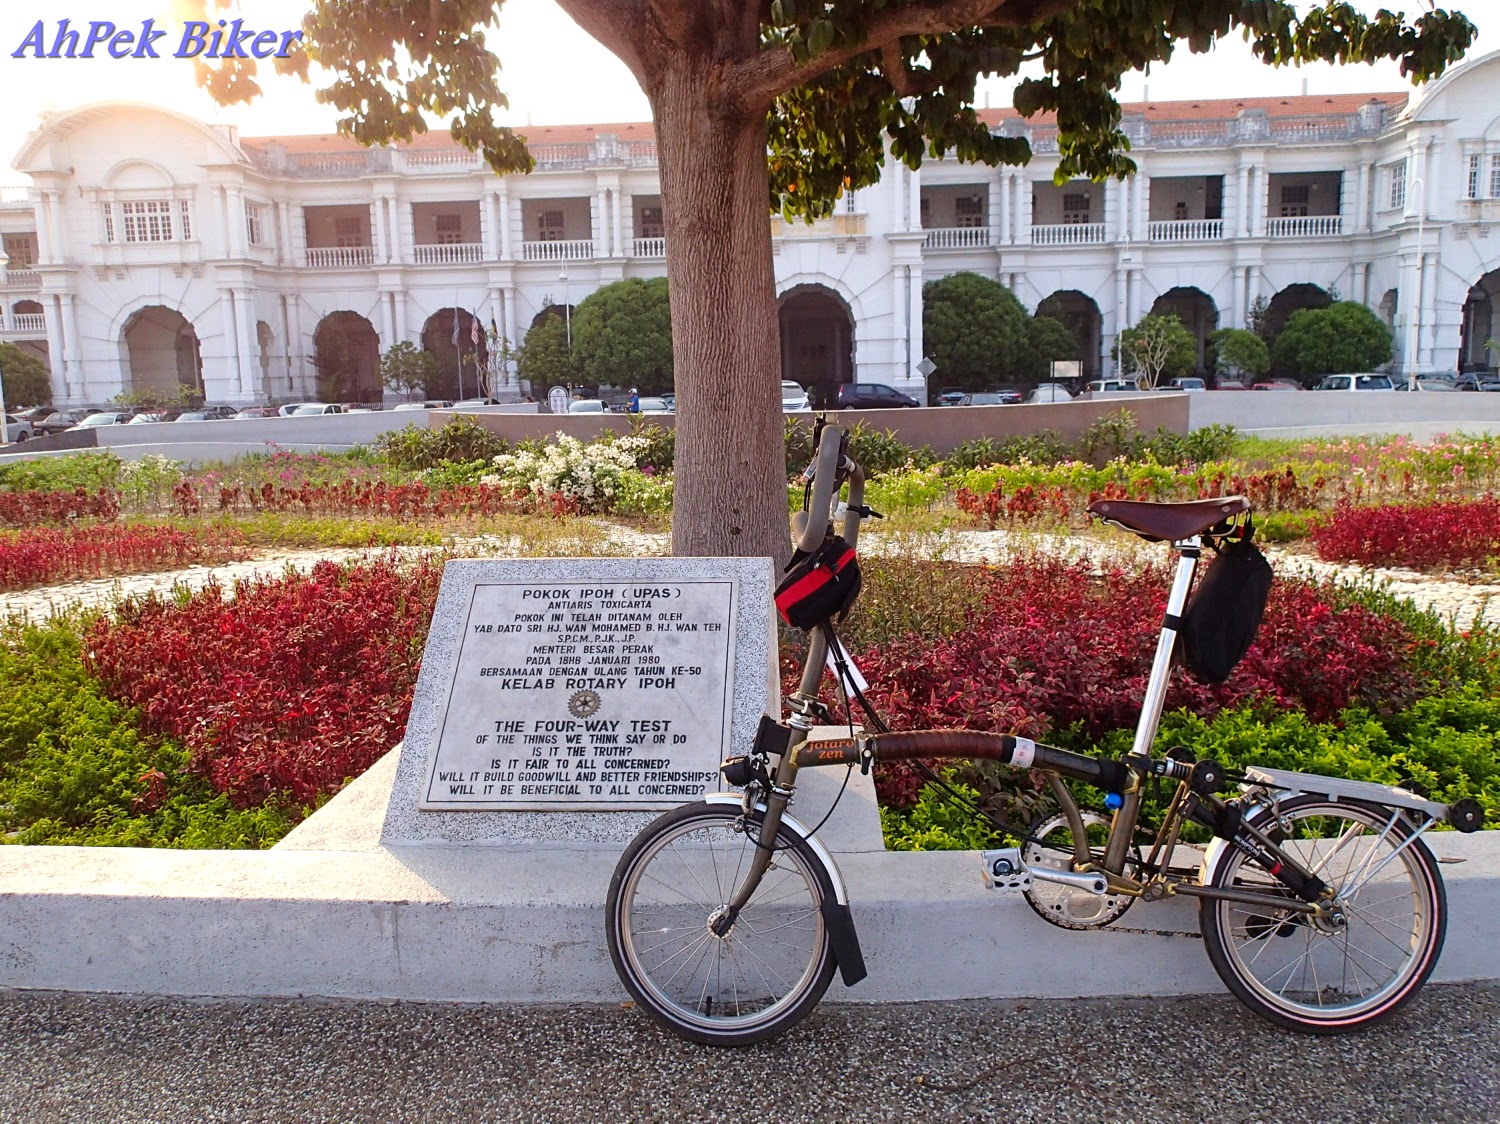 AhPek Biker - Old Dog Rides Again: Perak : Ipoh Tracks